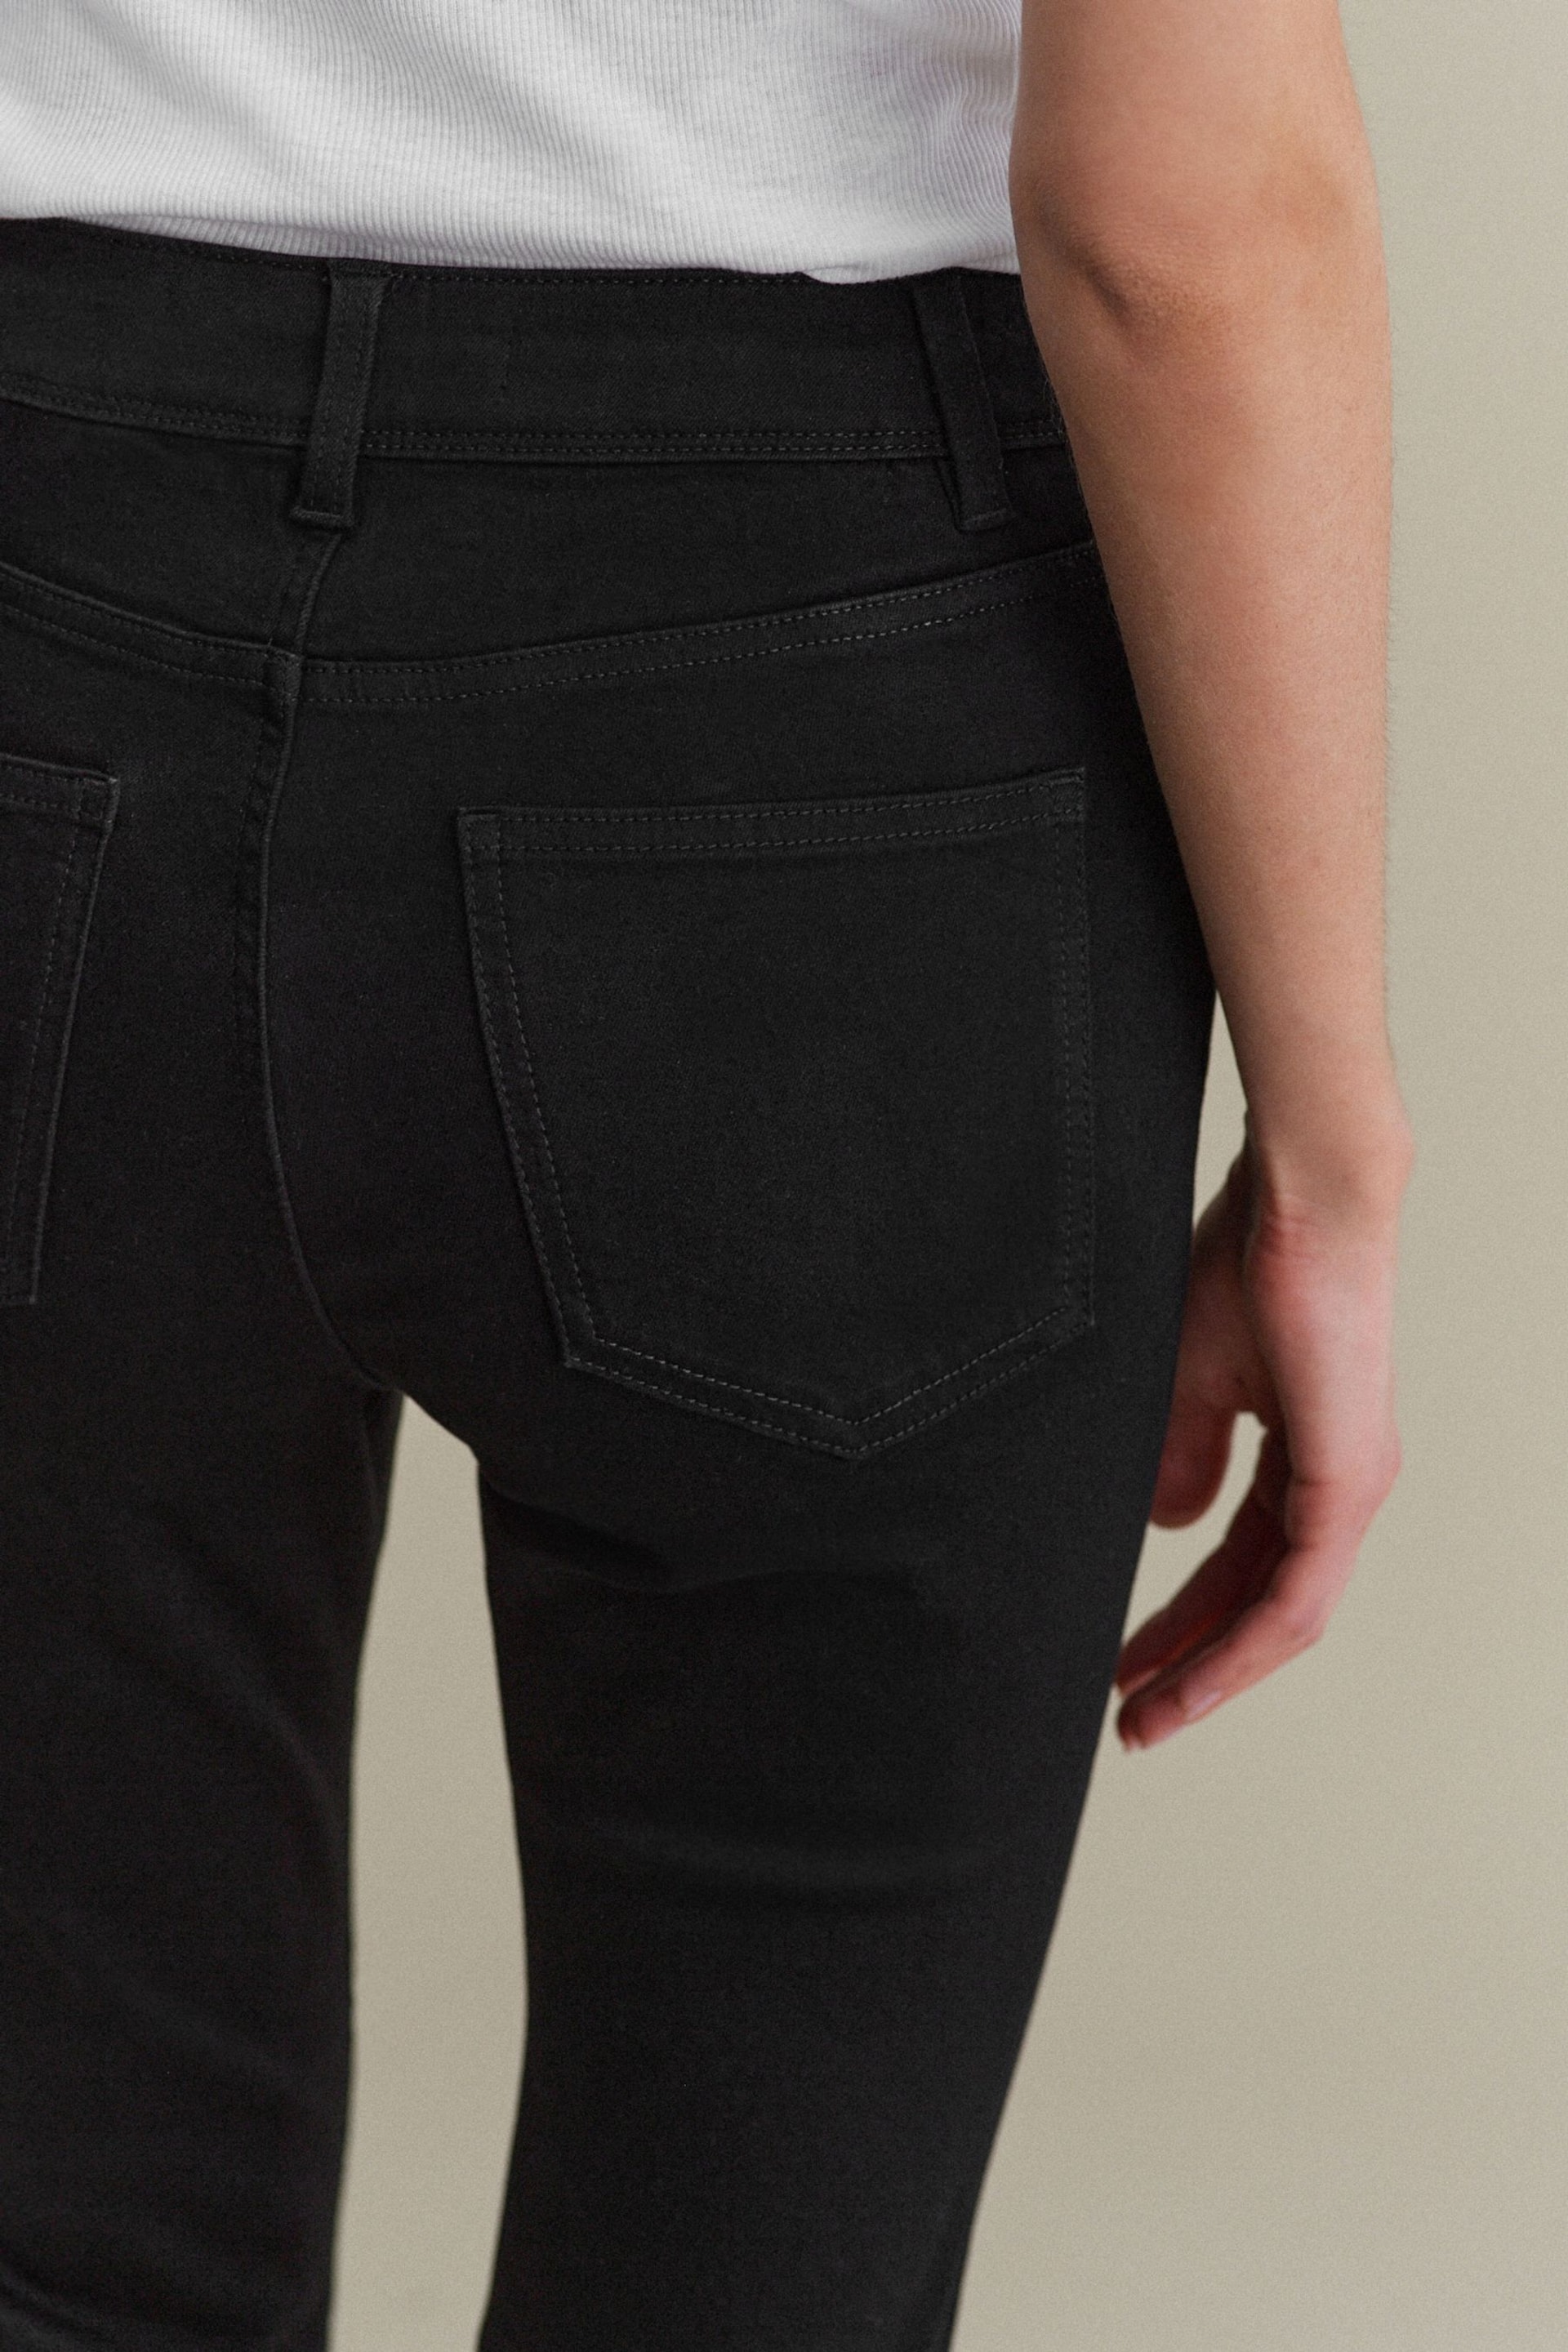 Black Slim Jeans - Image 5 of 7